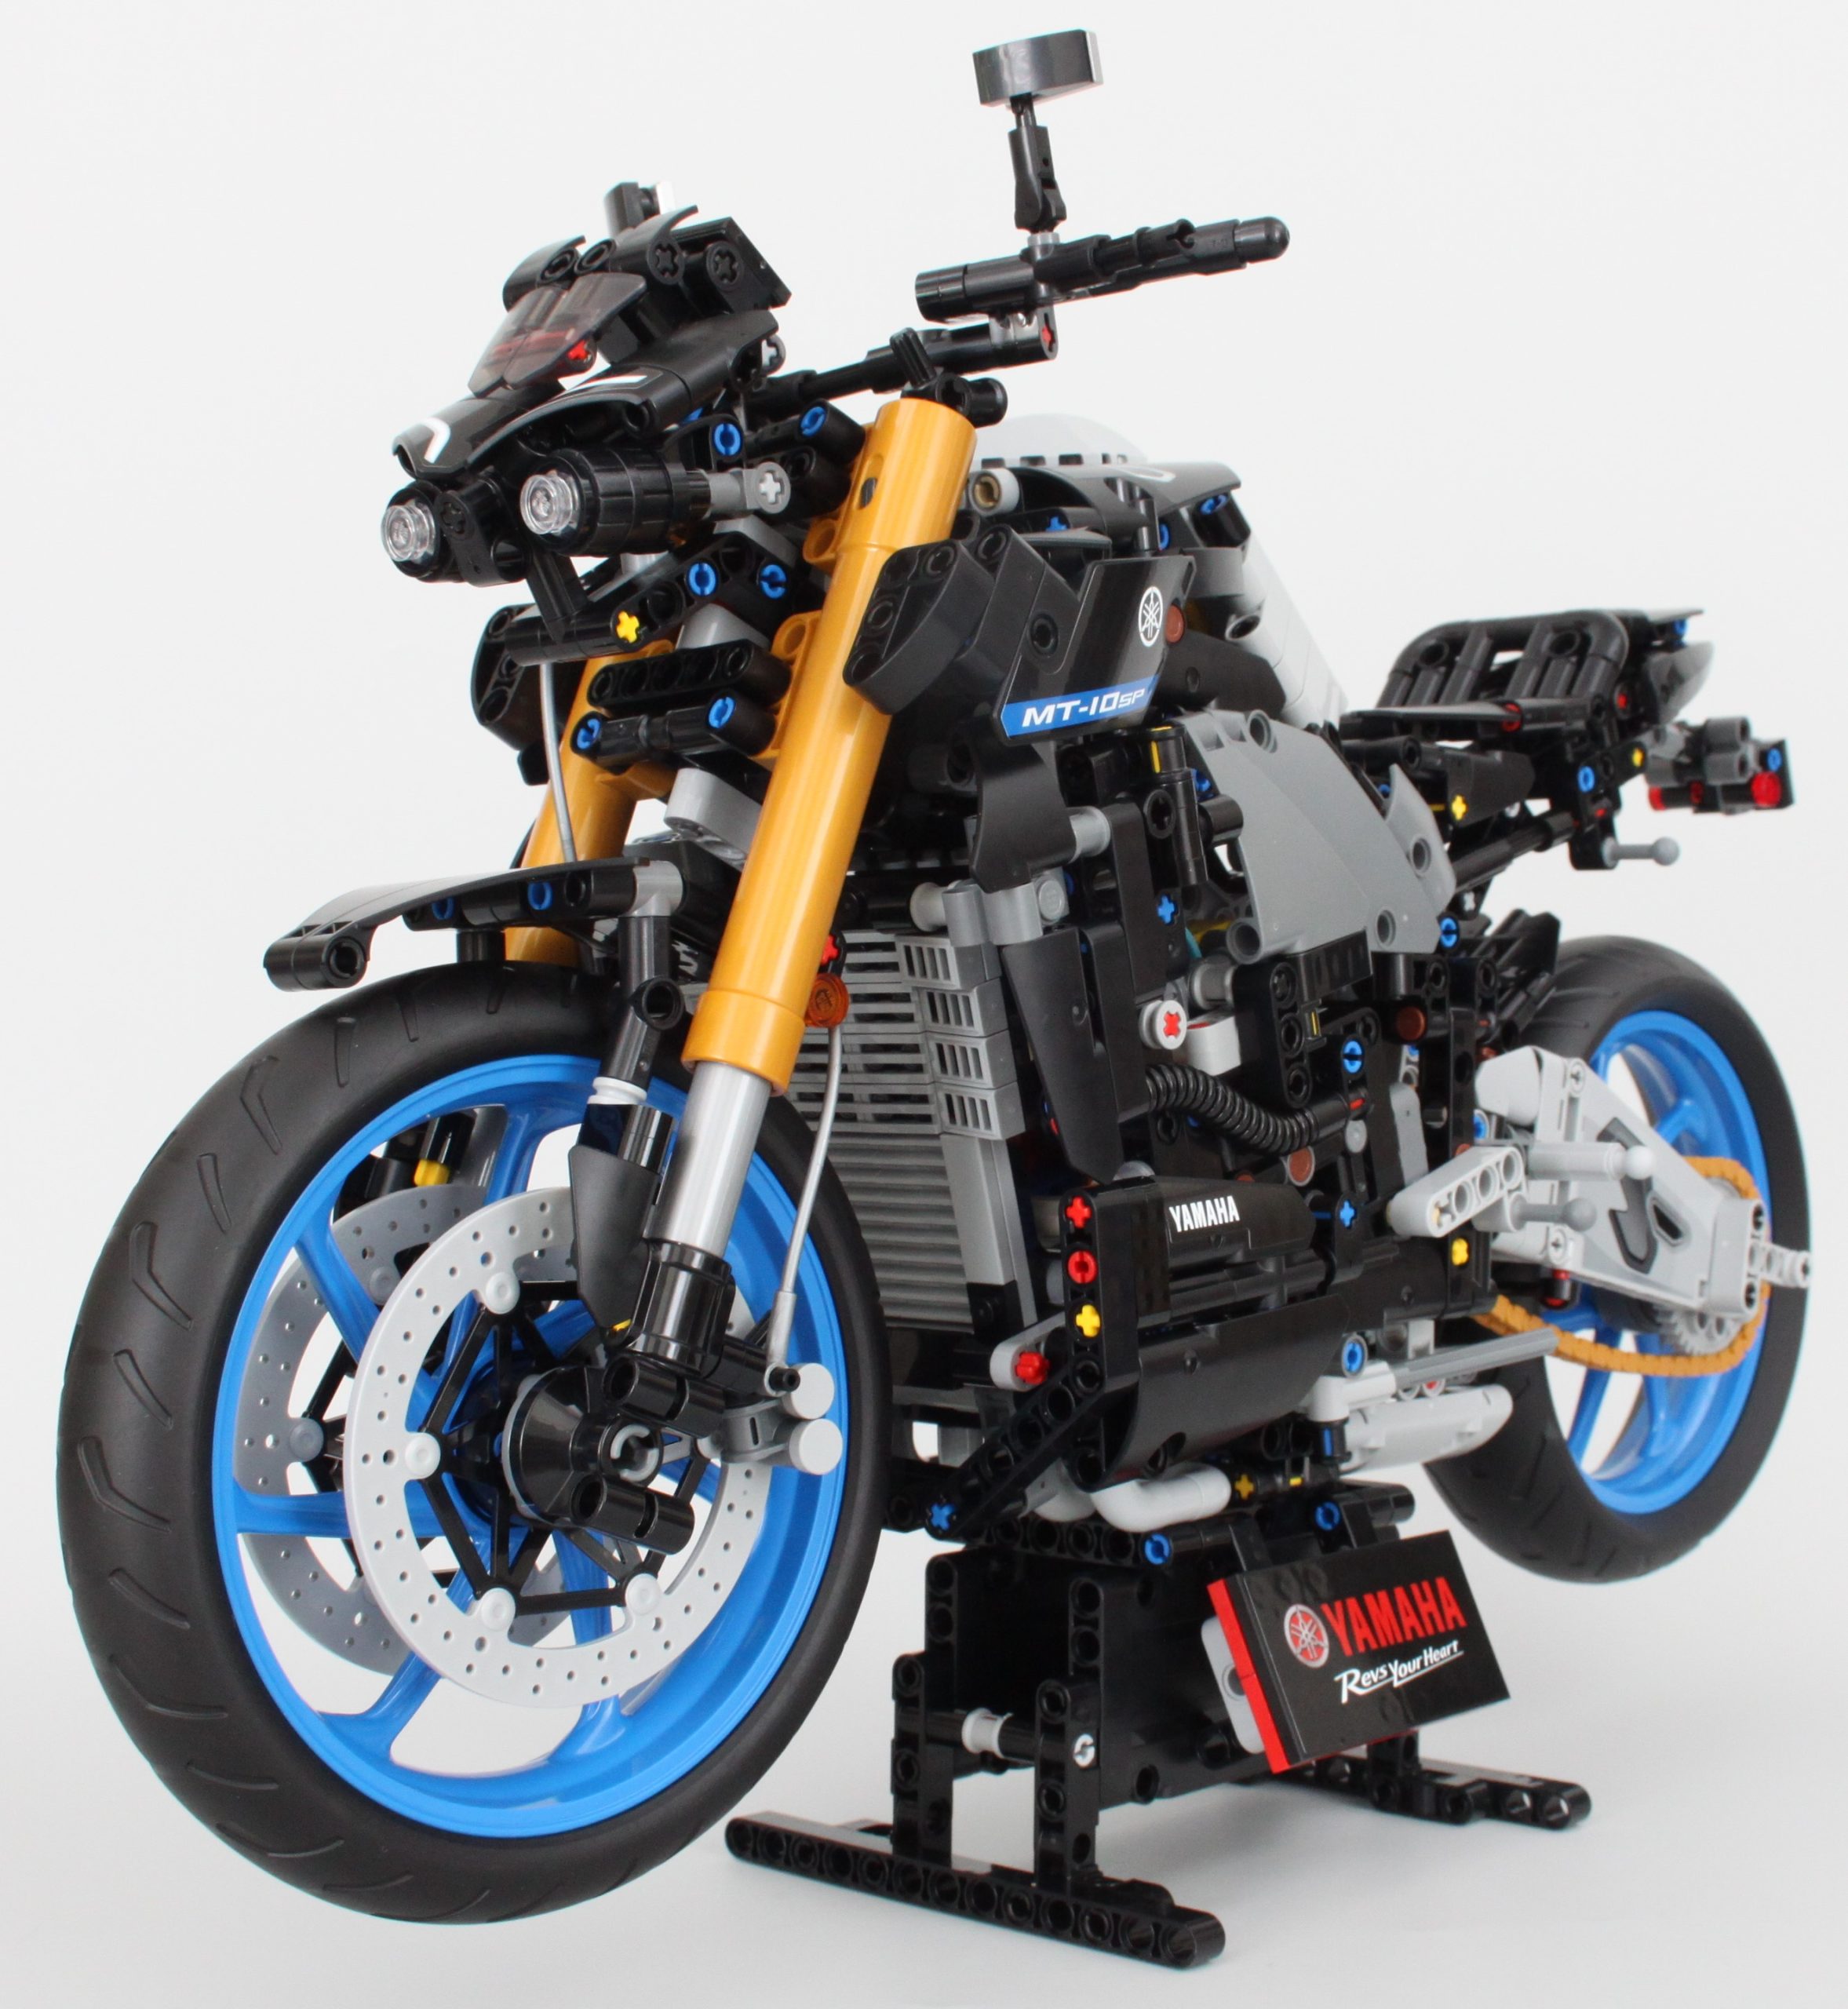 LEGO Technic Yamaha Motorcycle 42159: Detailed set review 2023